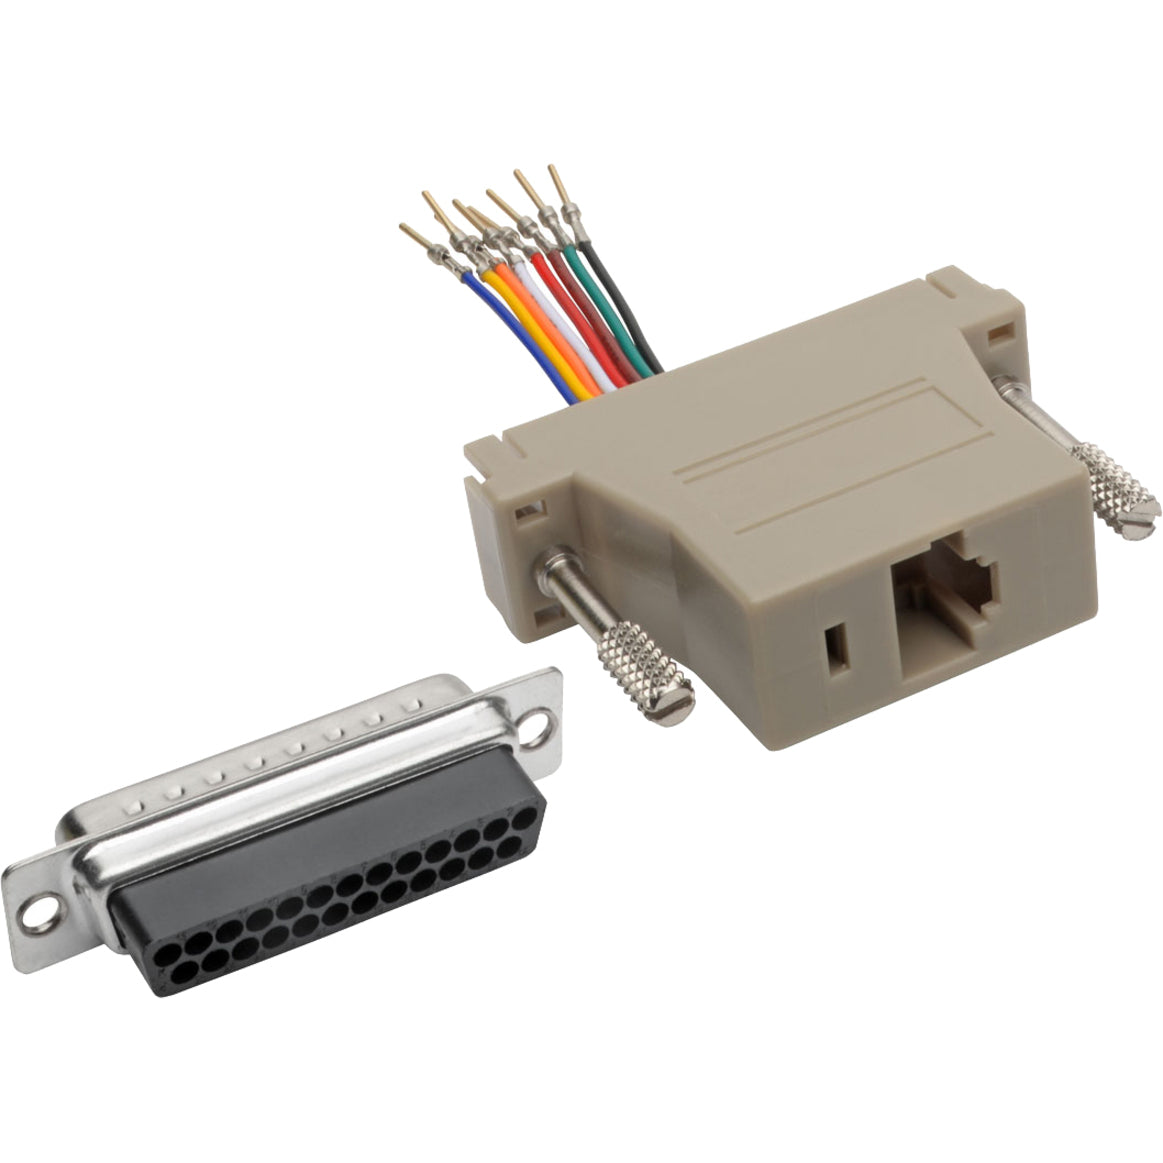 Tripp Lite P440-825FM DB25 to RJ45 Modular Serial Adapter (M/F), Data Transfer Adapter